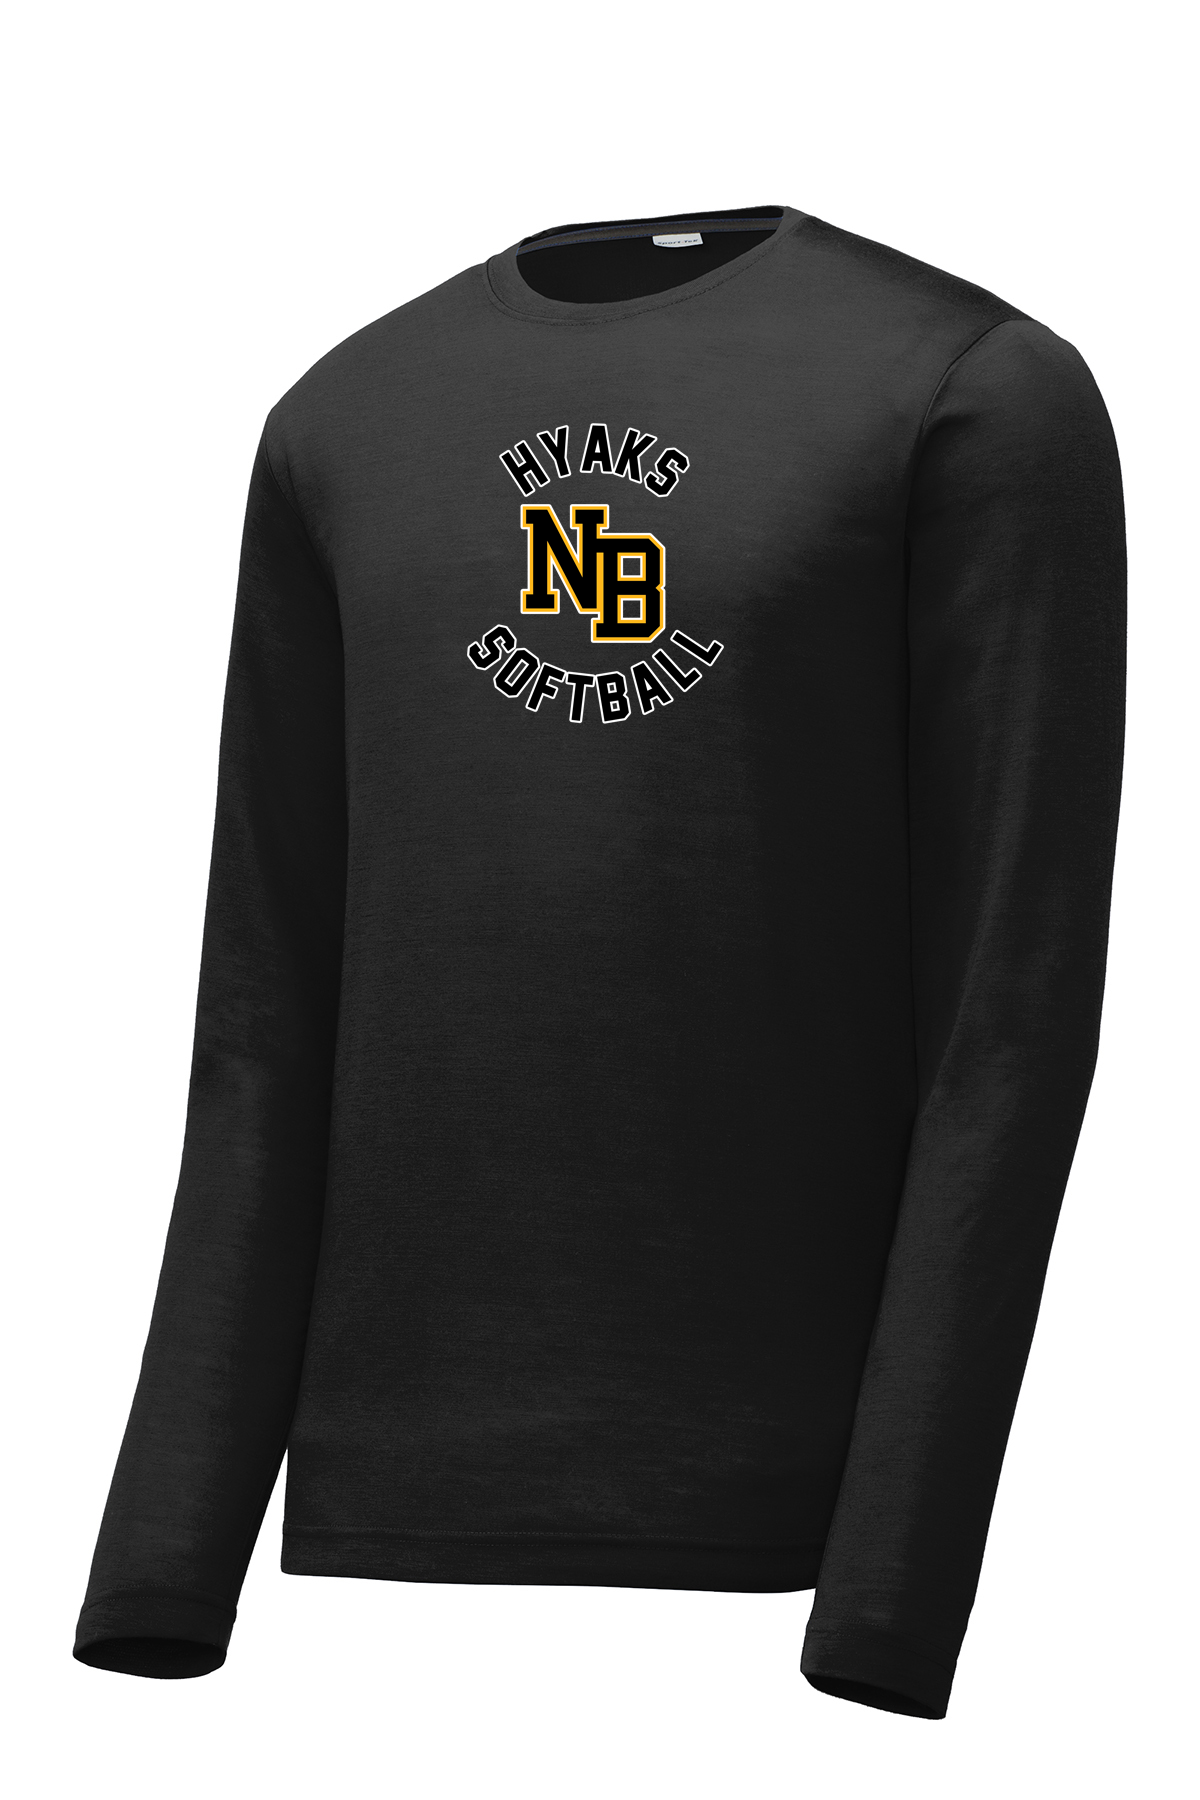 North Beach Softball Long Sleeve CottonTouch Performance Shirt